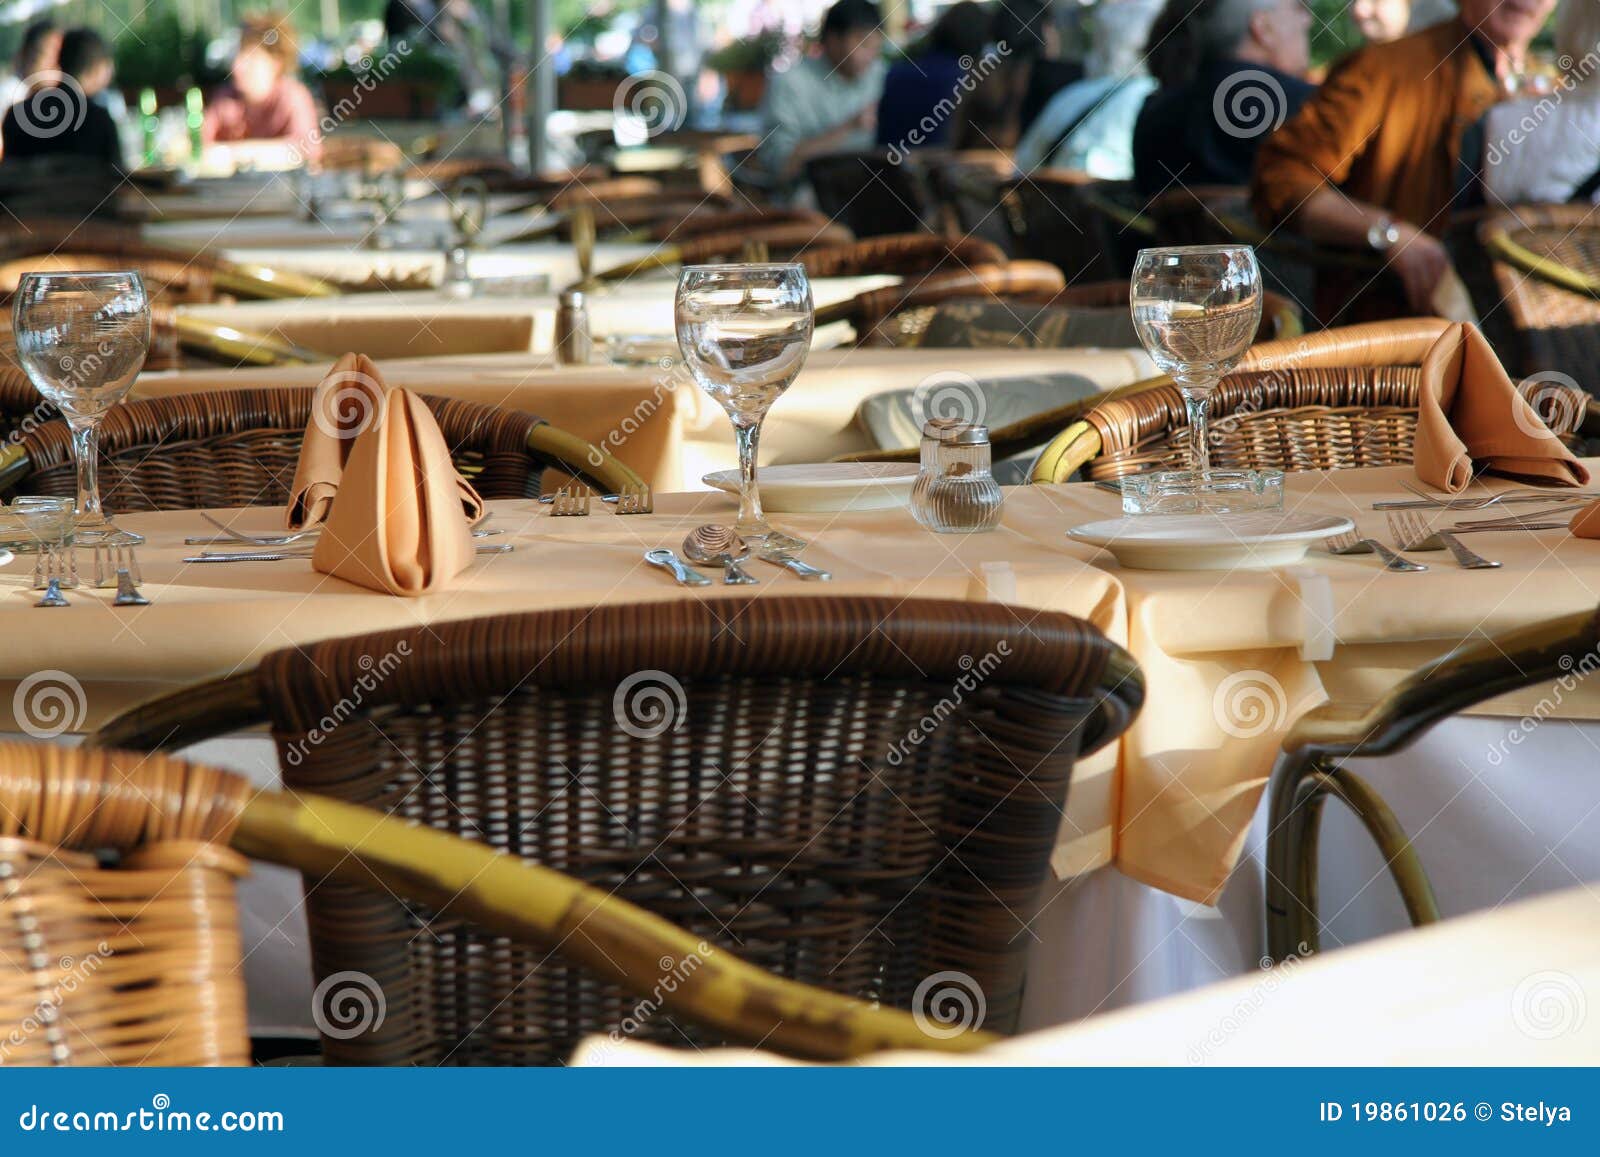 Fancy Dinner Table At Restaurant Stock Photo - Image of dinner, outdoor